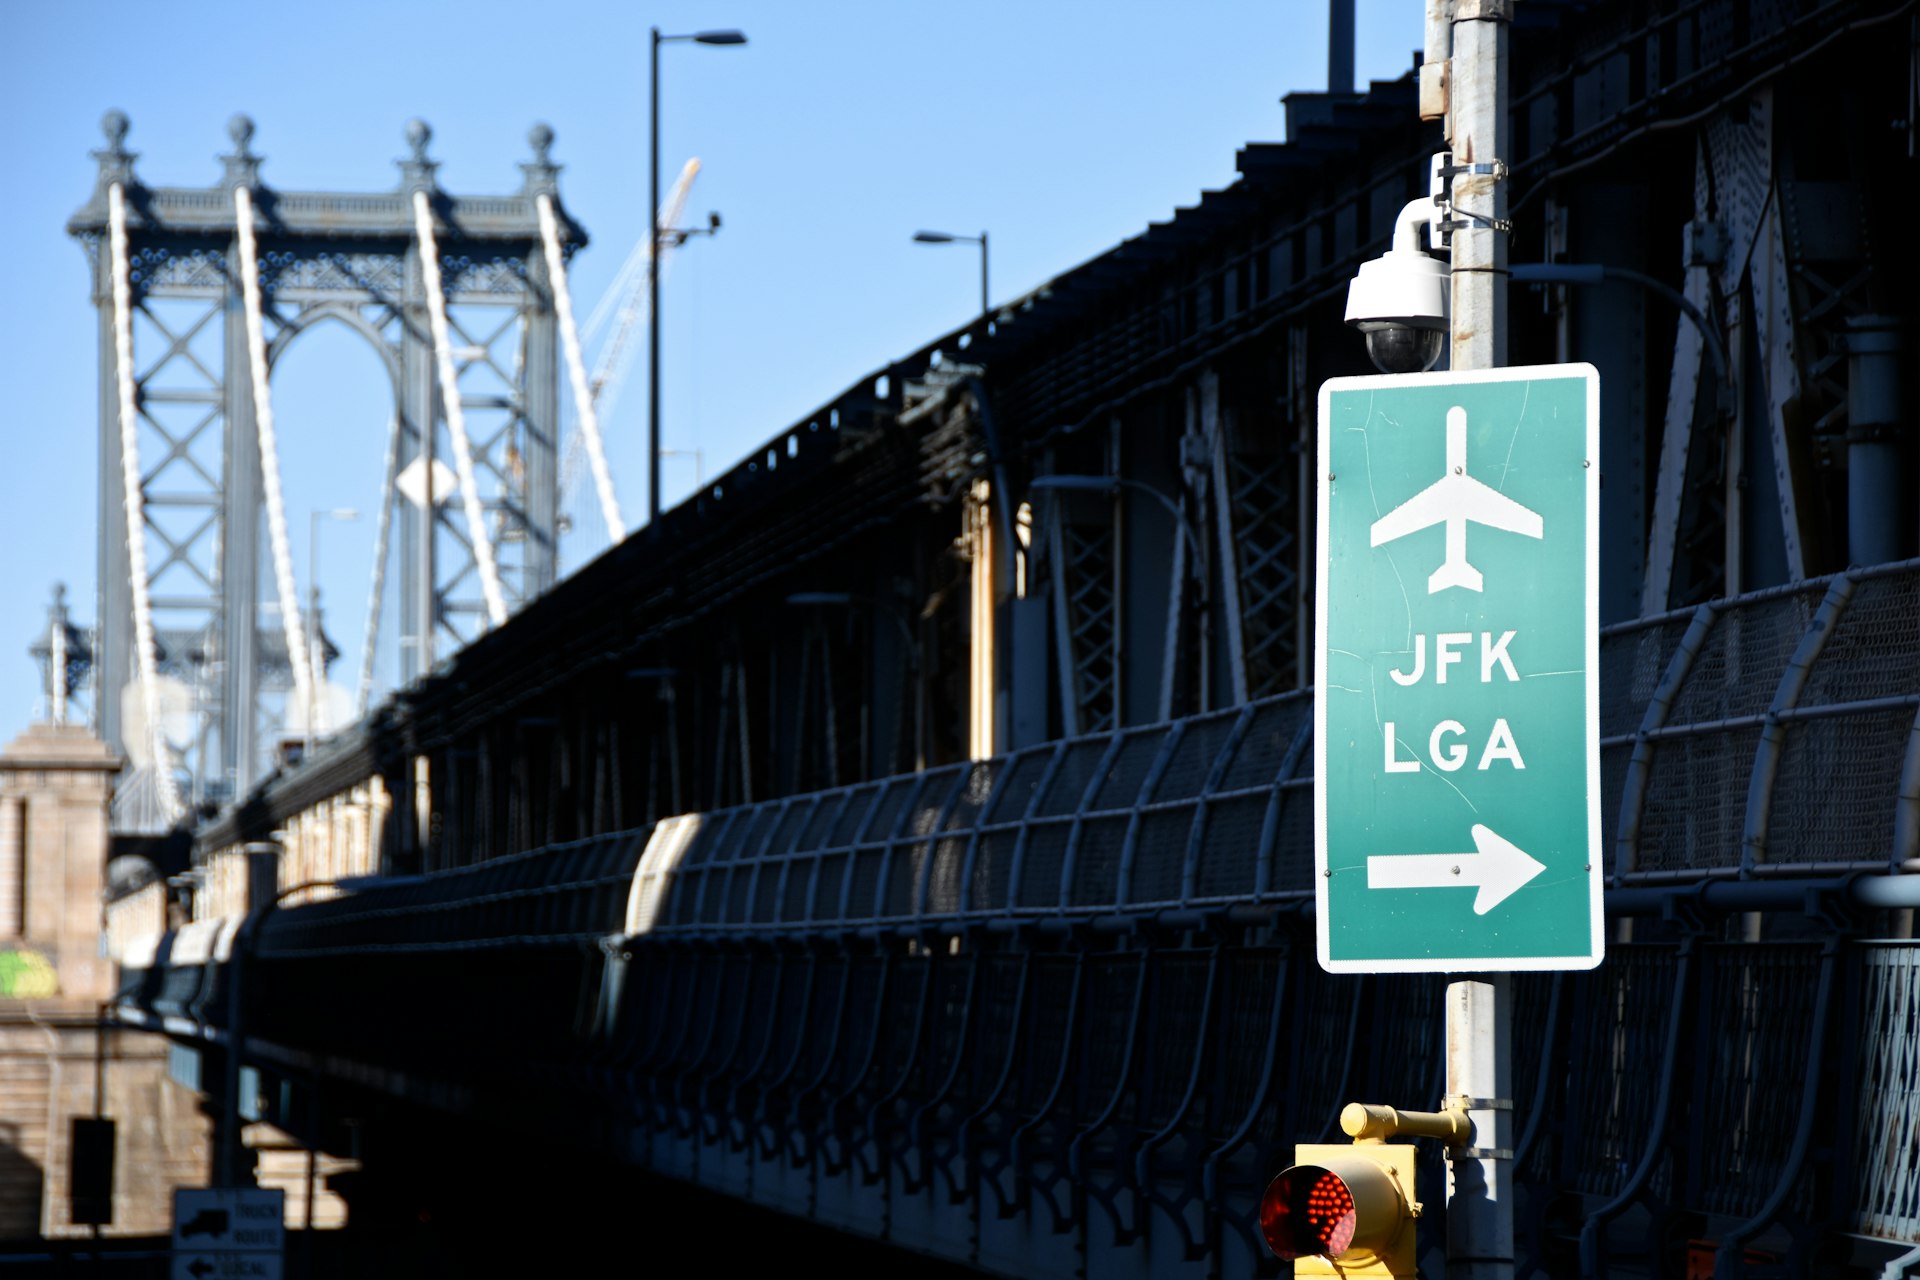 JFK and LaGuardia road signs in front of a bridge